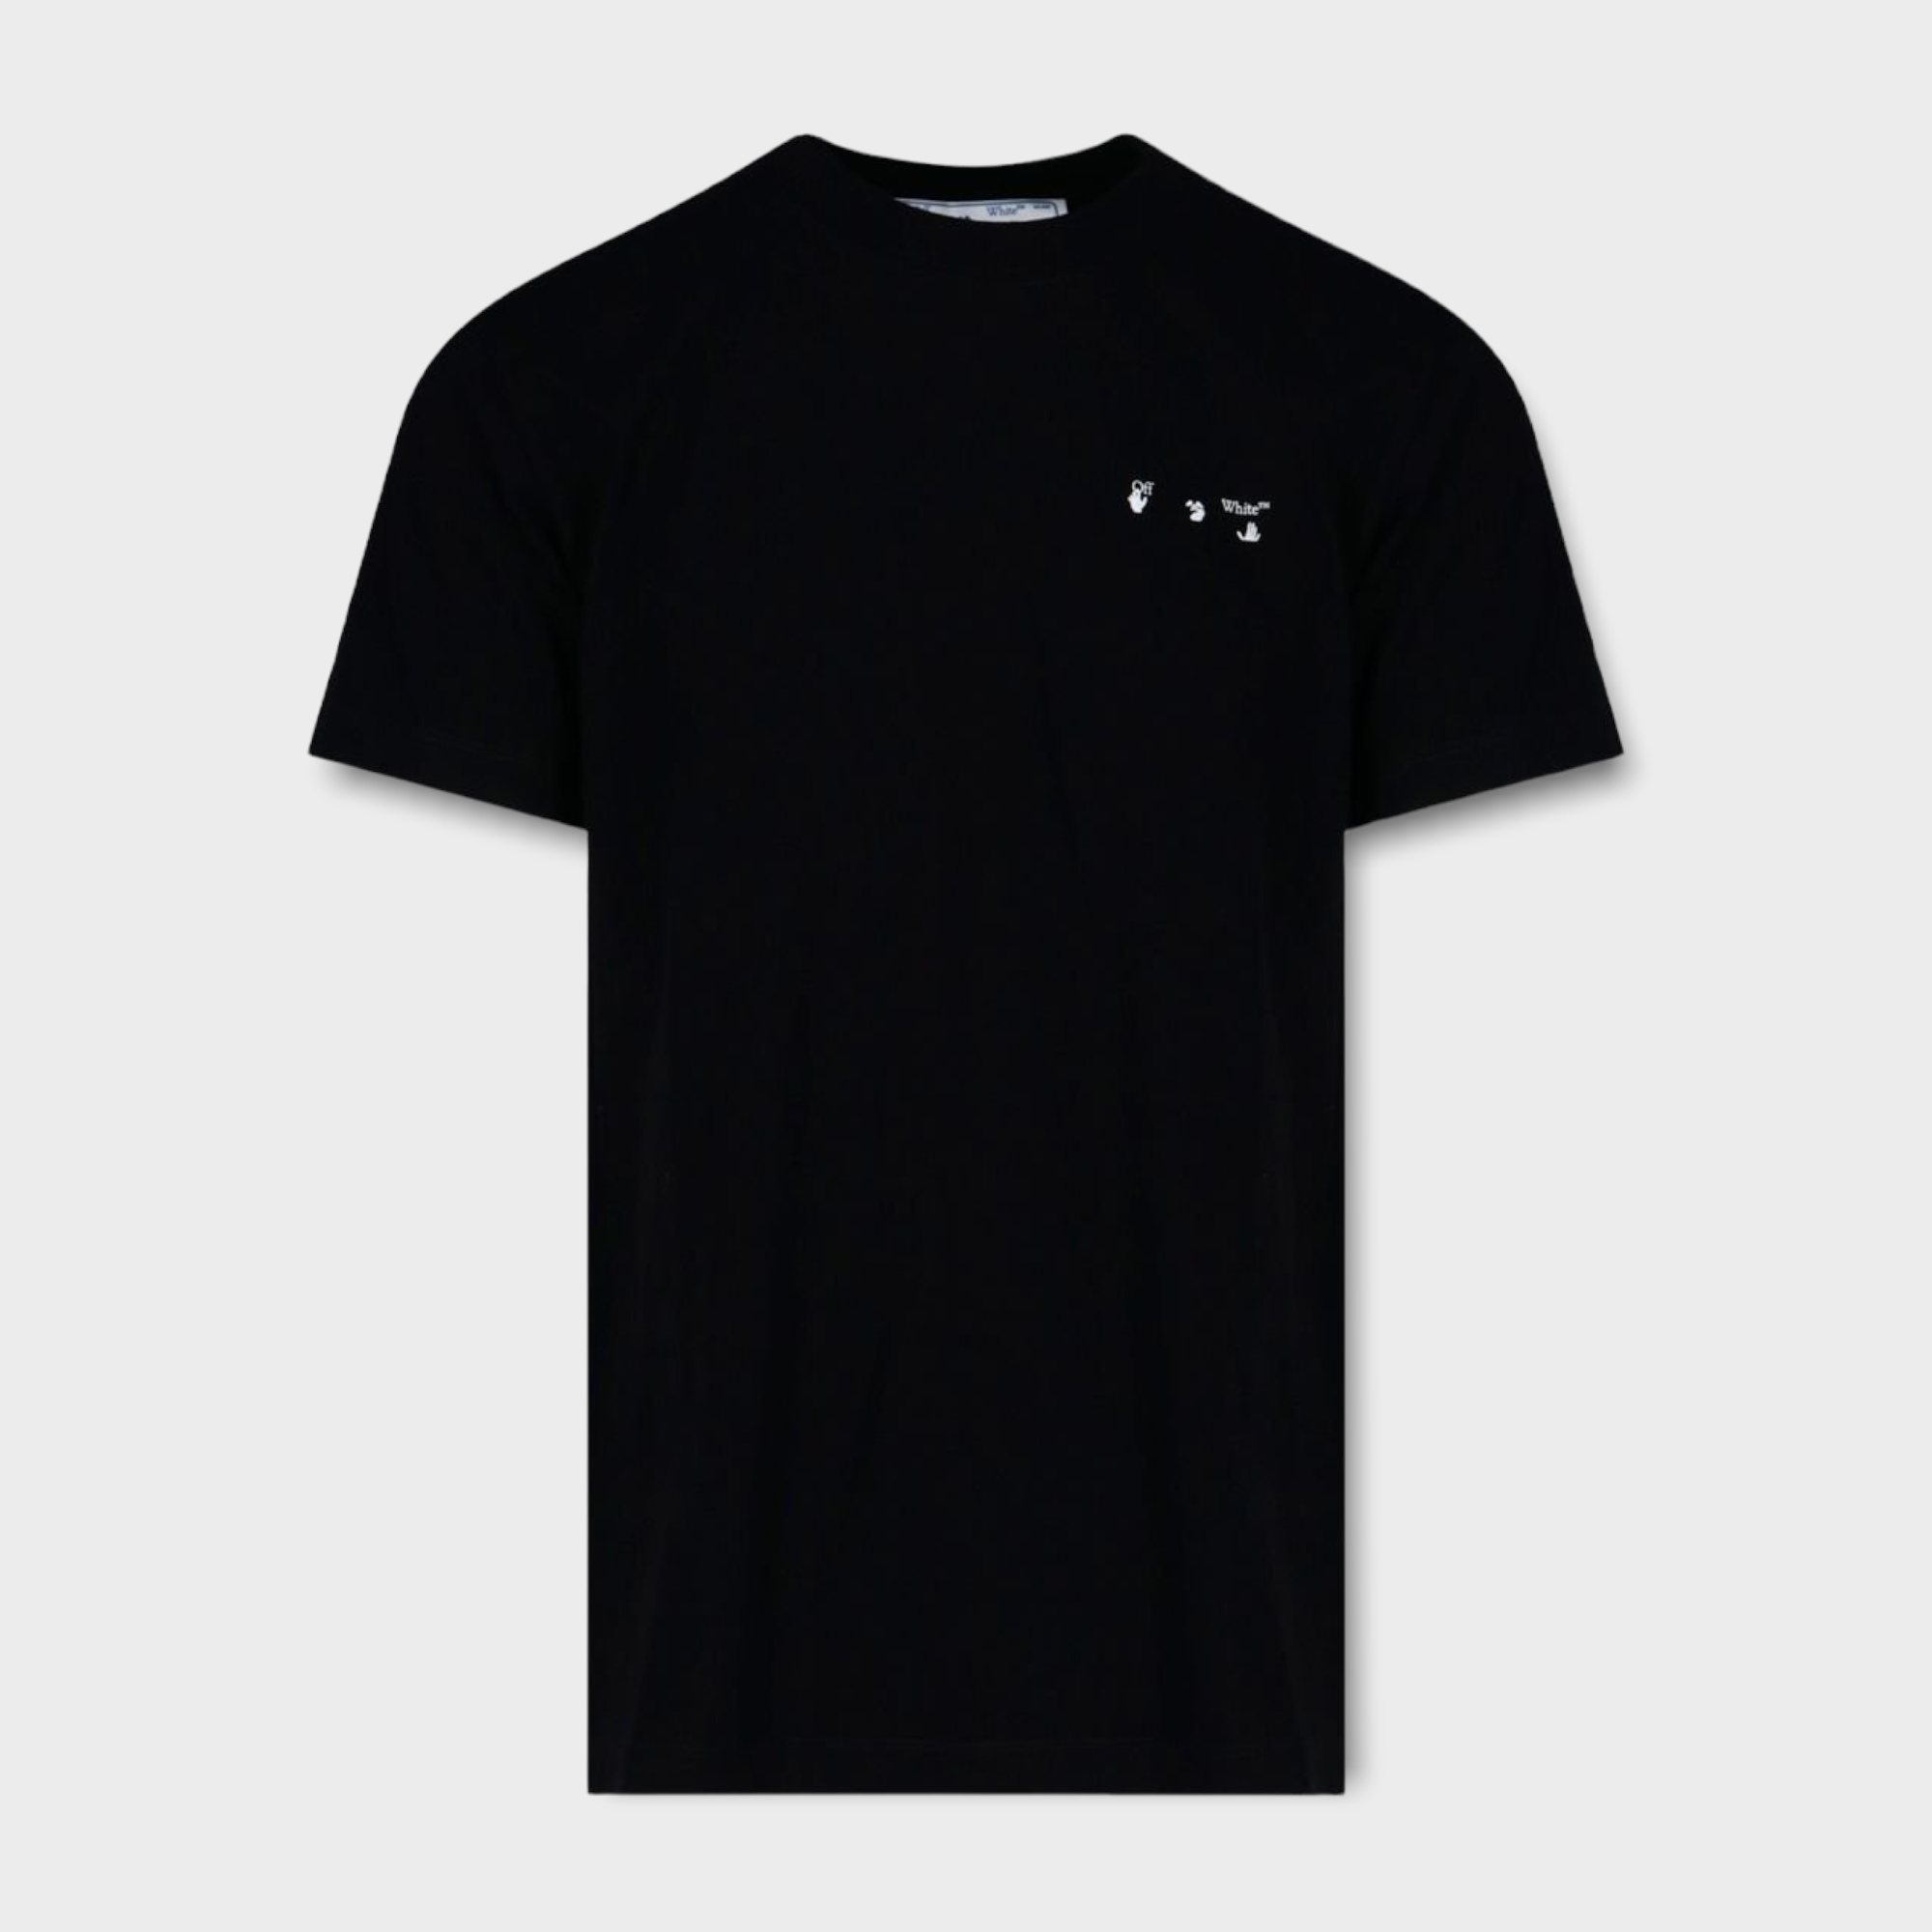 Off-White Arrows T-Shirt - Size M